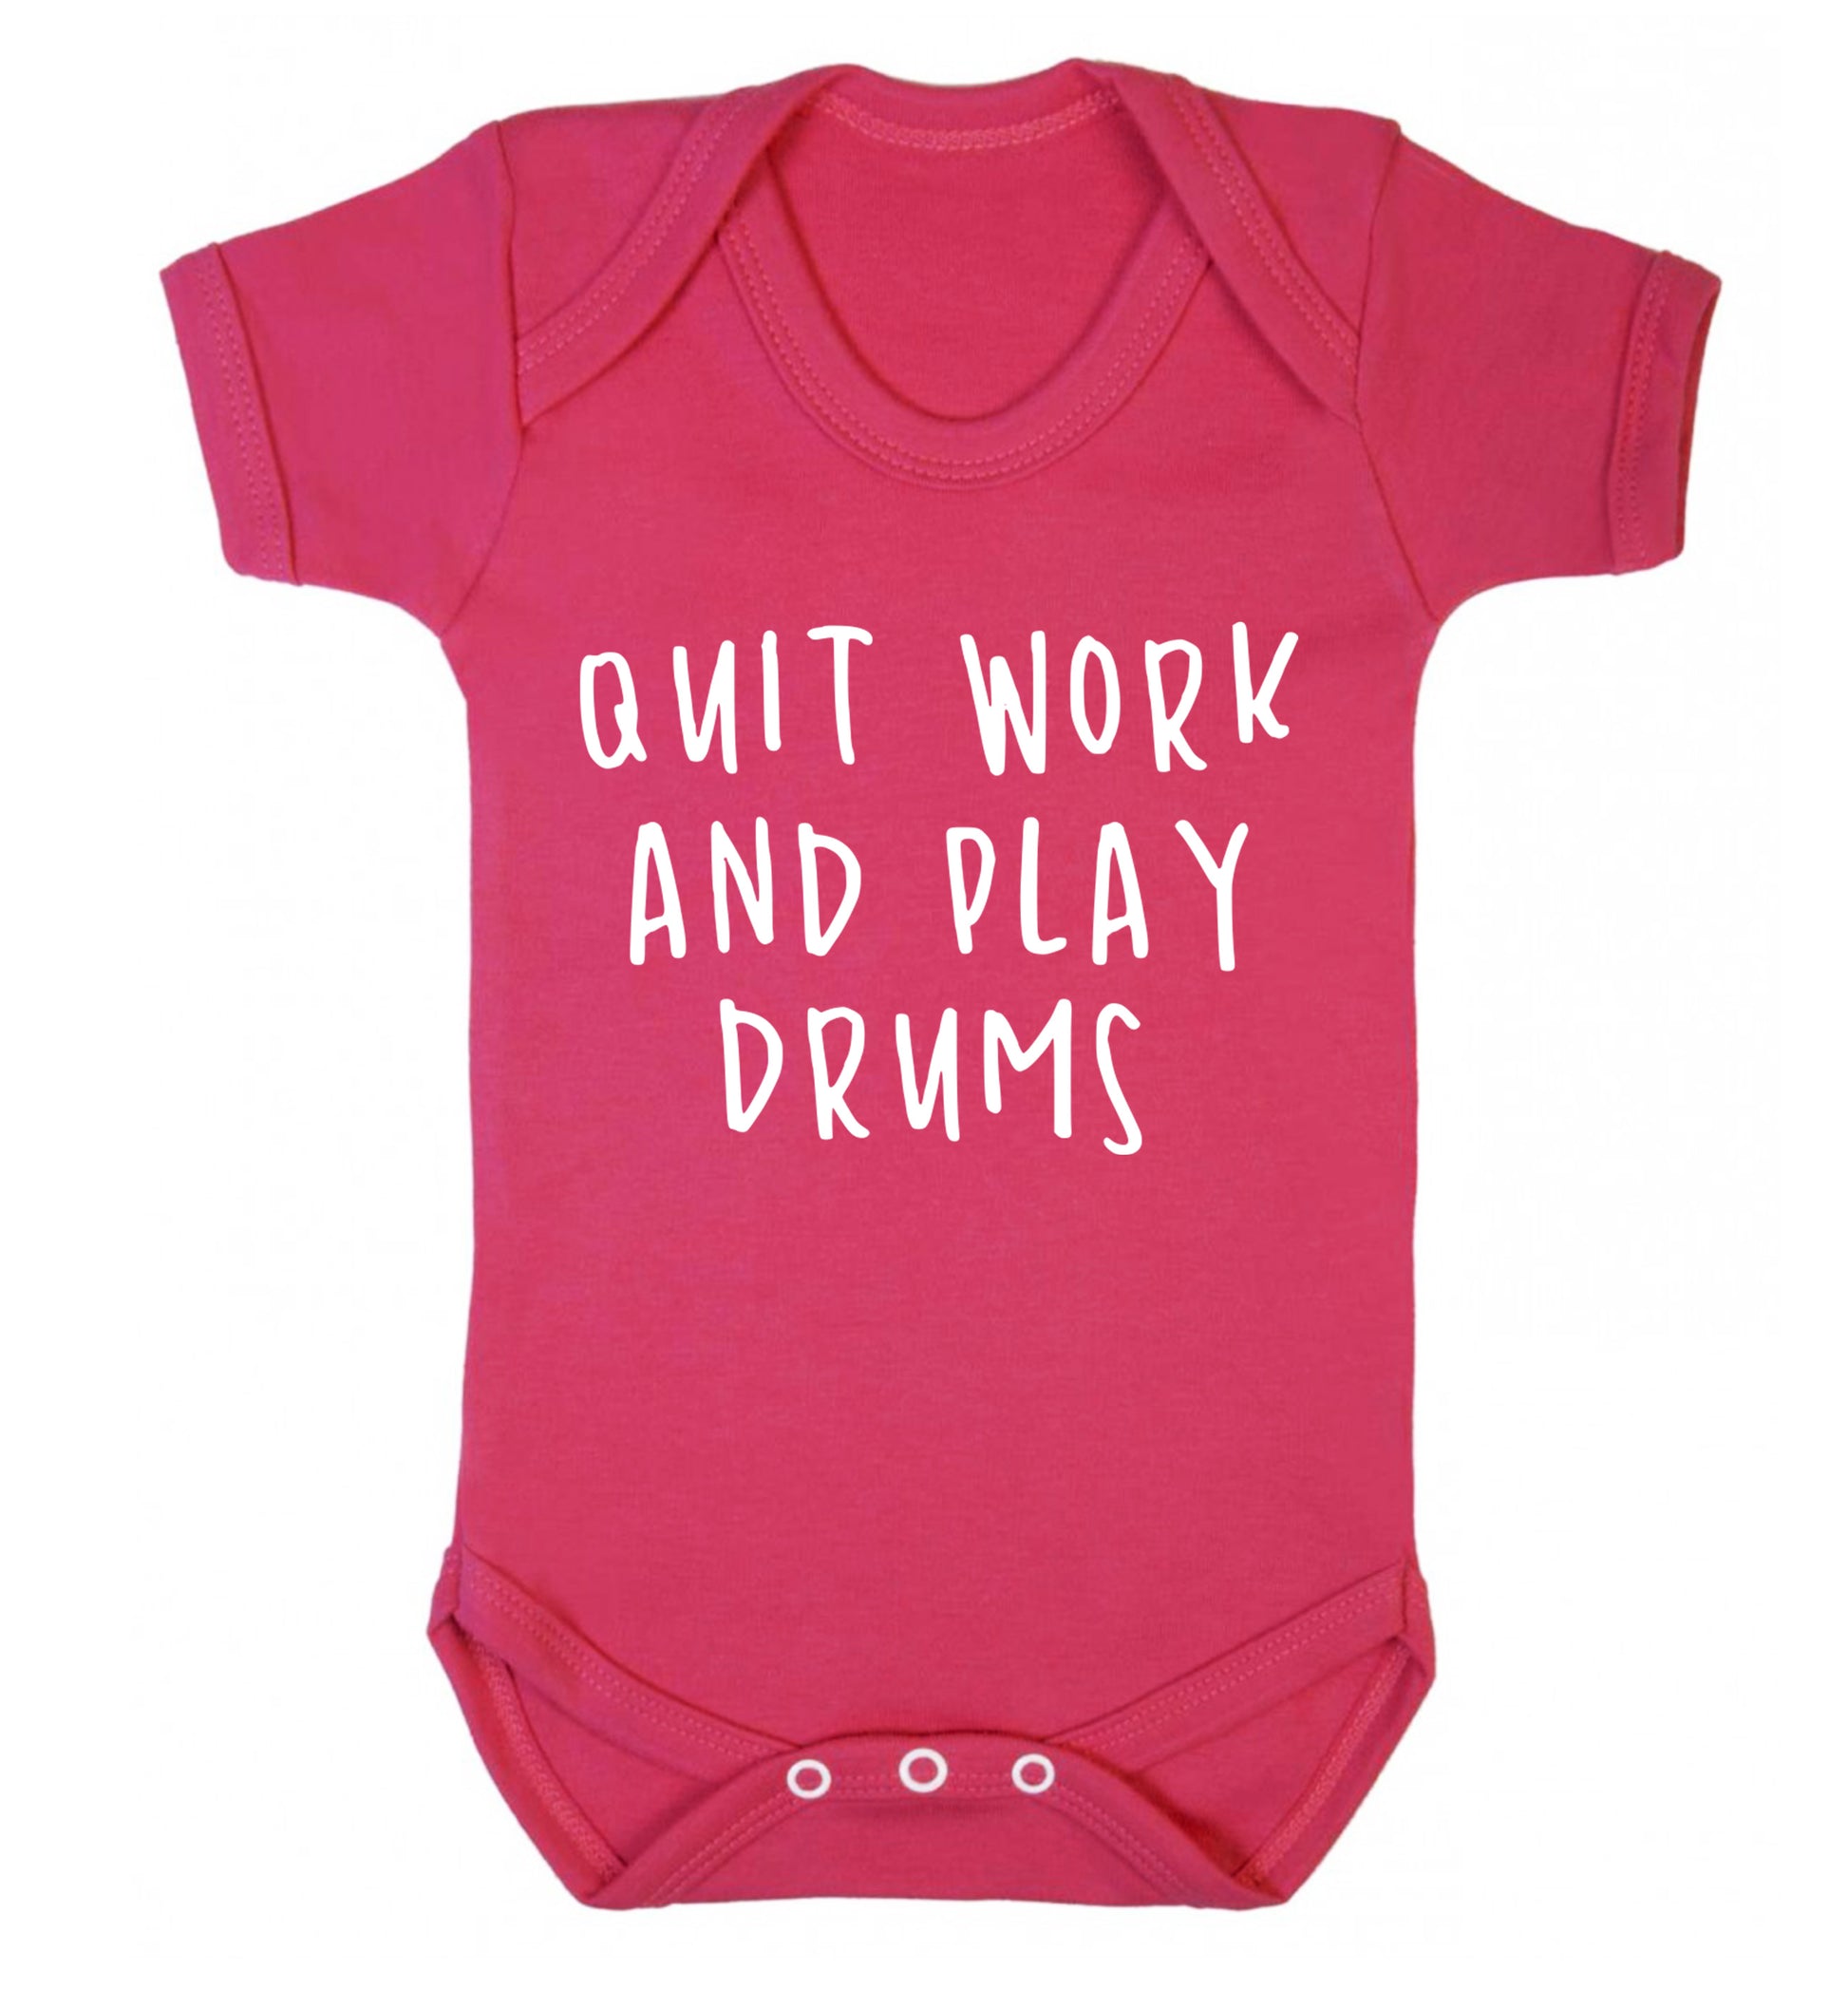 Quit work and play drums Baby Vest dark pink 18-24 months